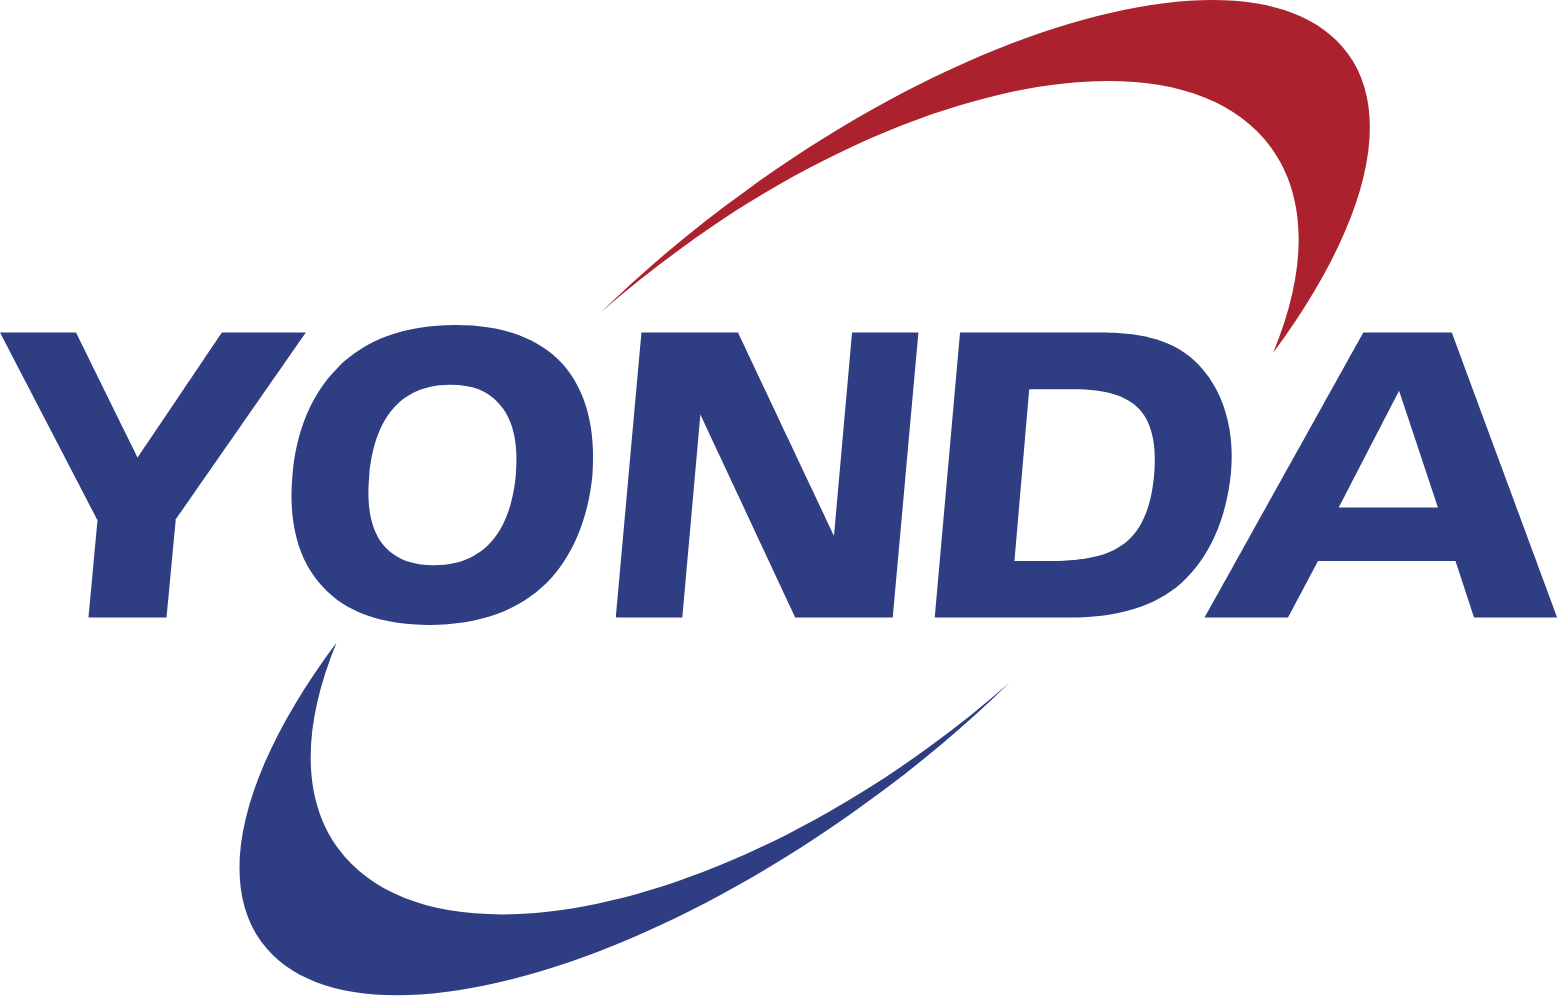 China Yongda Automobiles Services logo (transparent PNG)